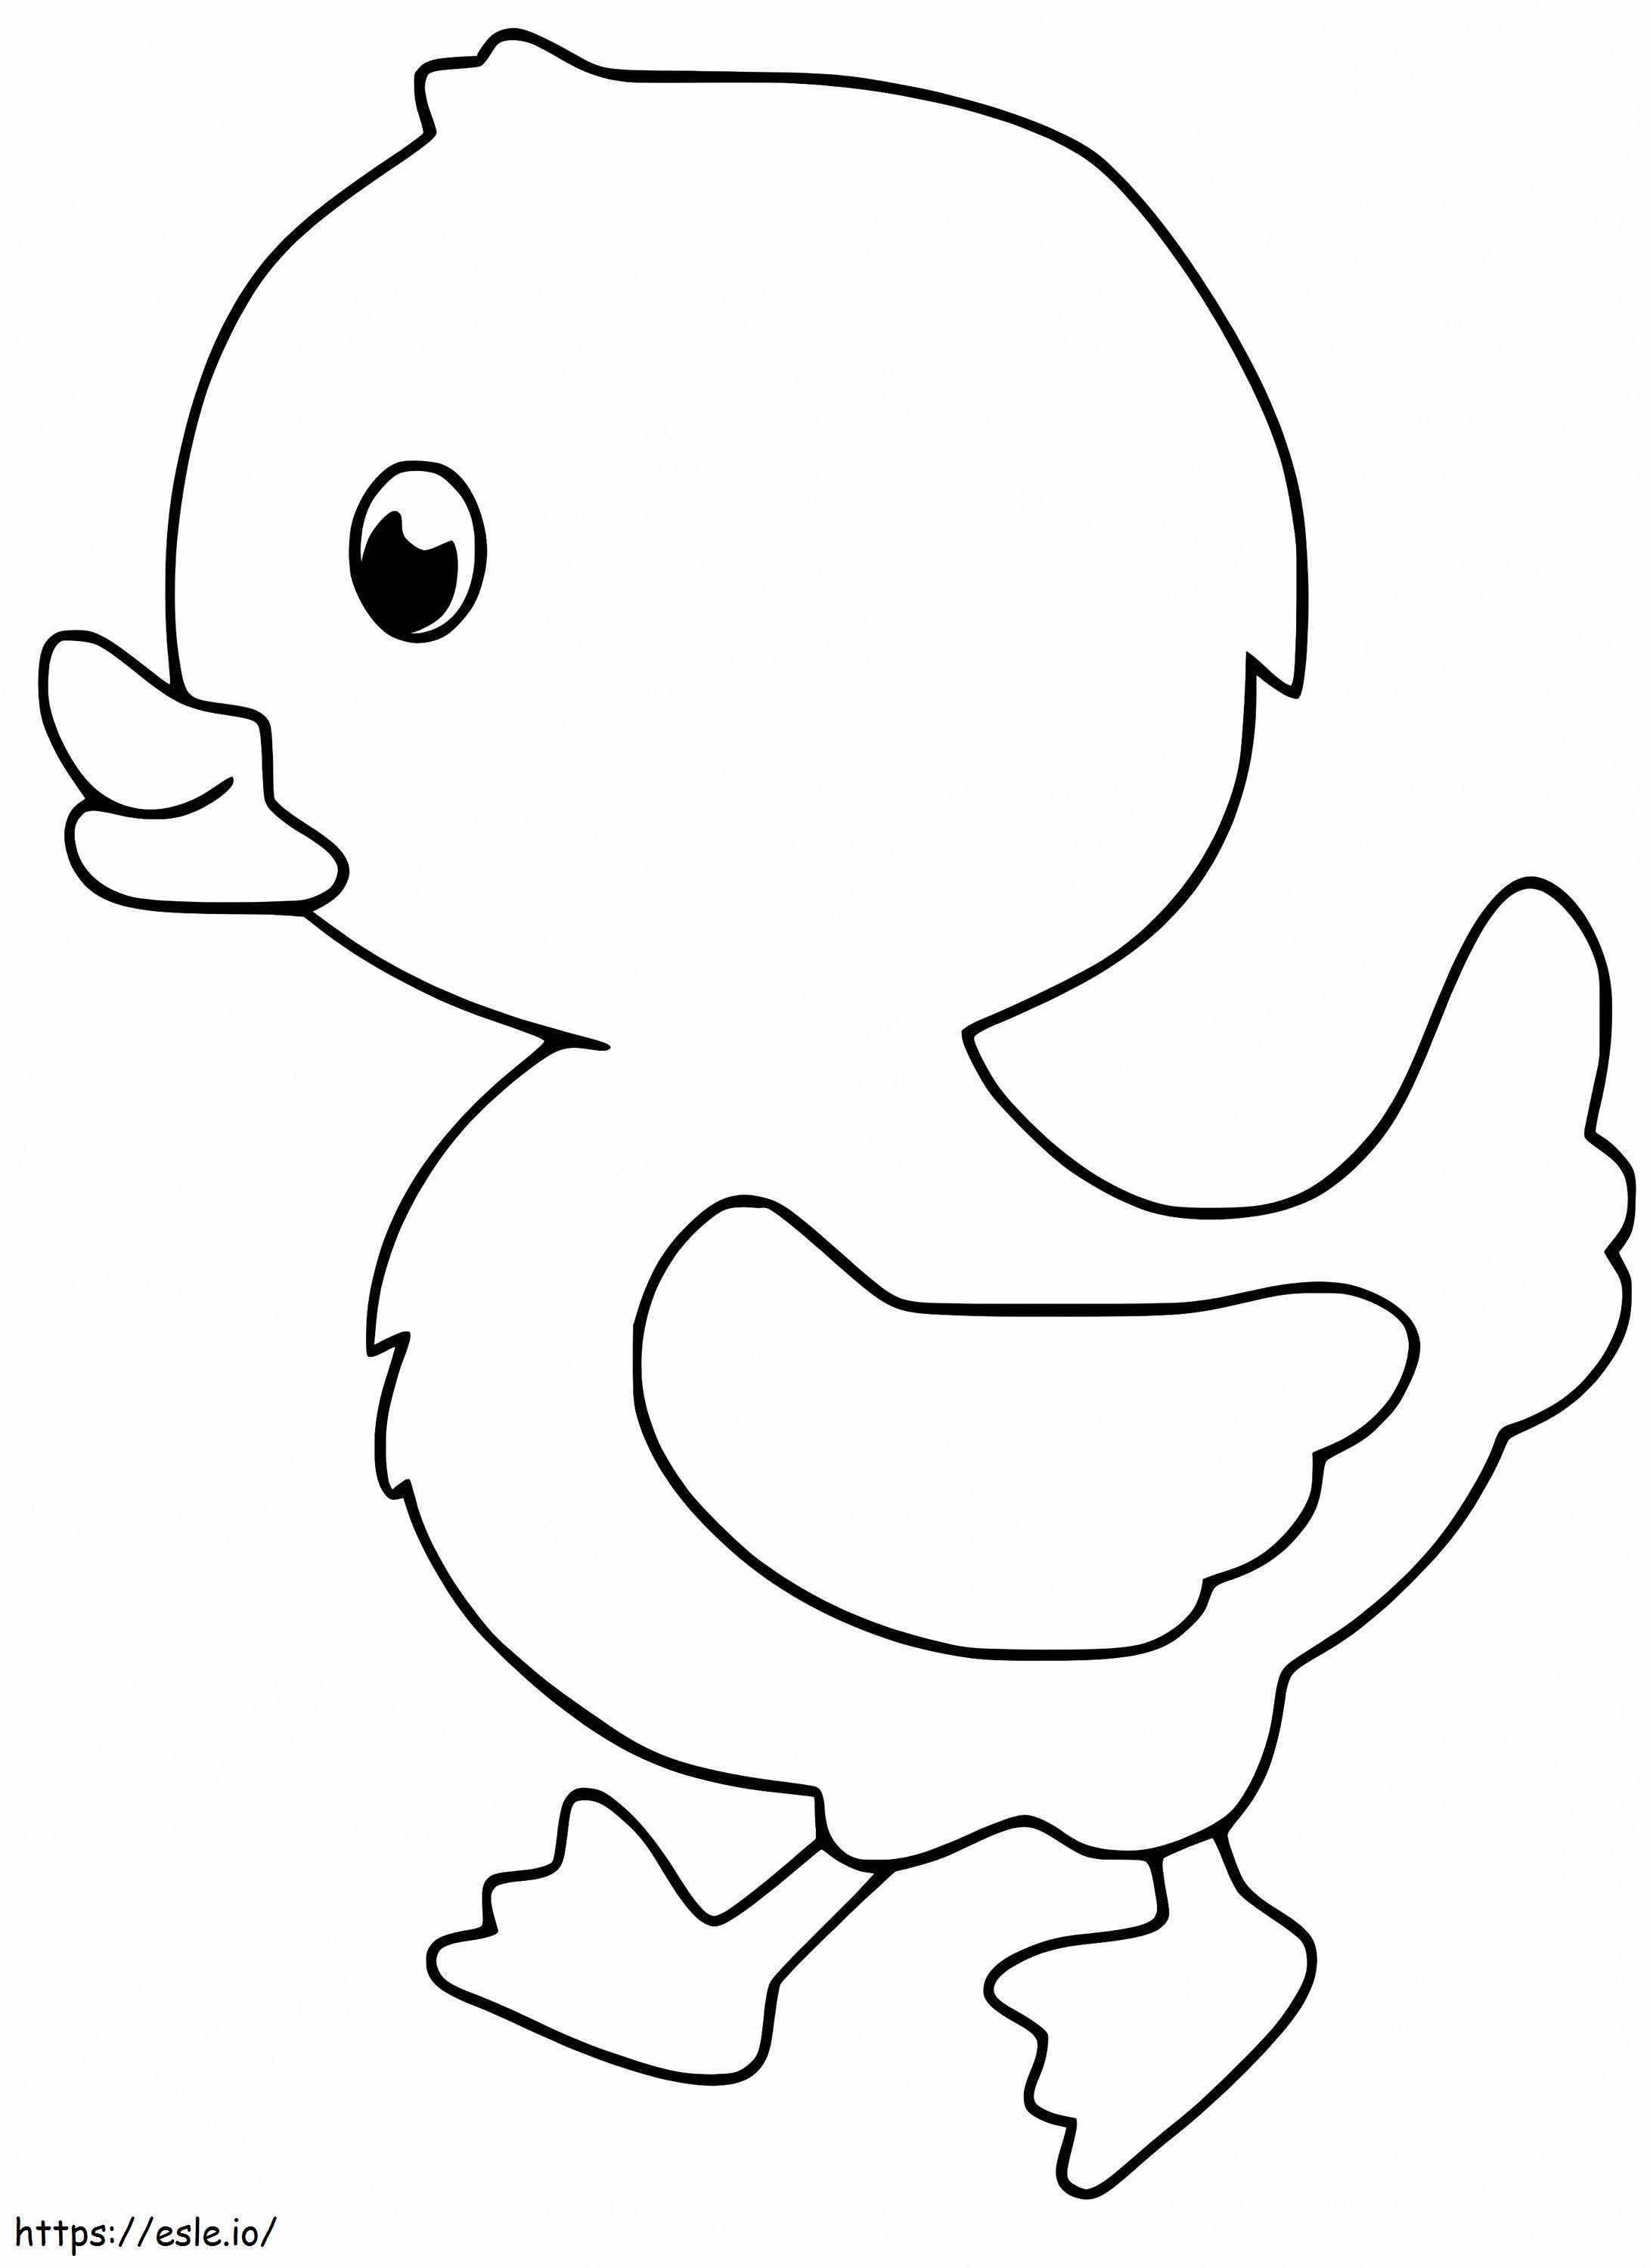 Coloriage Adorable petit canard à imprimer dessin